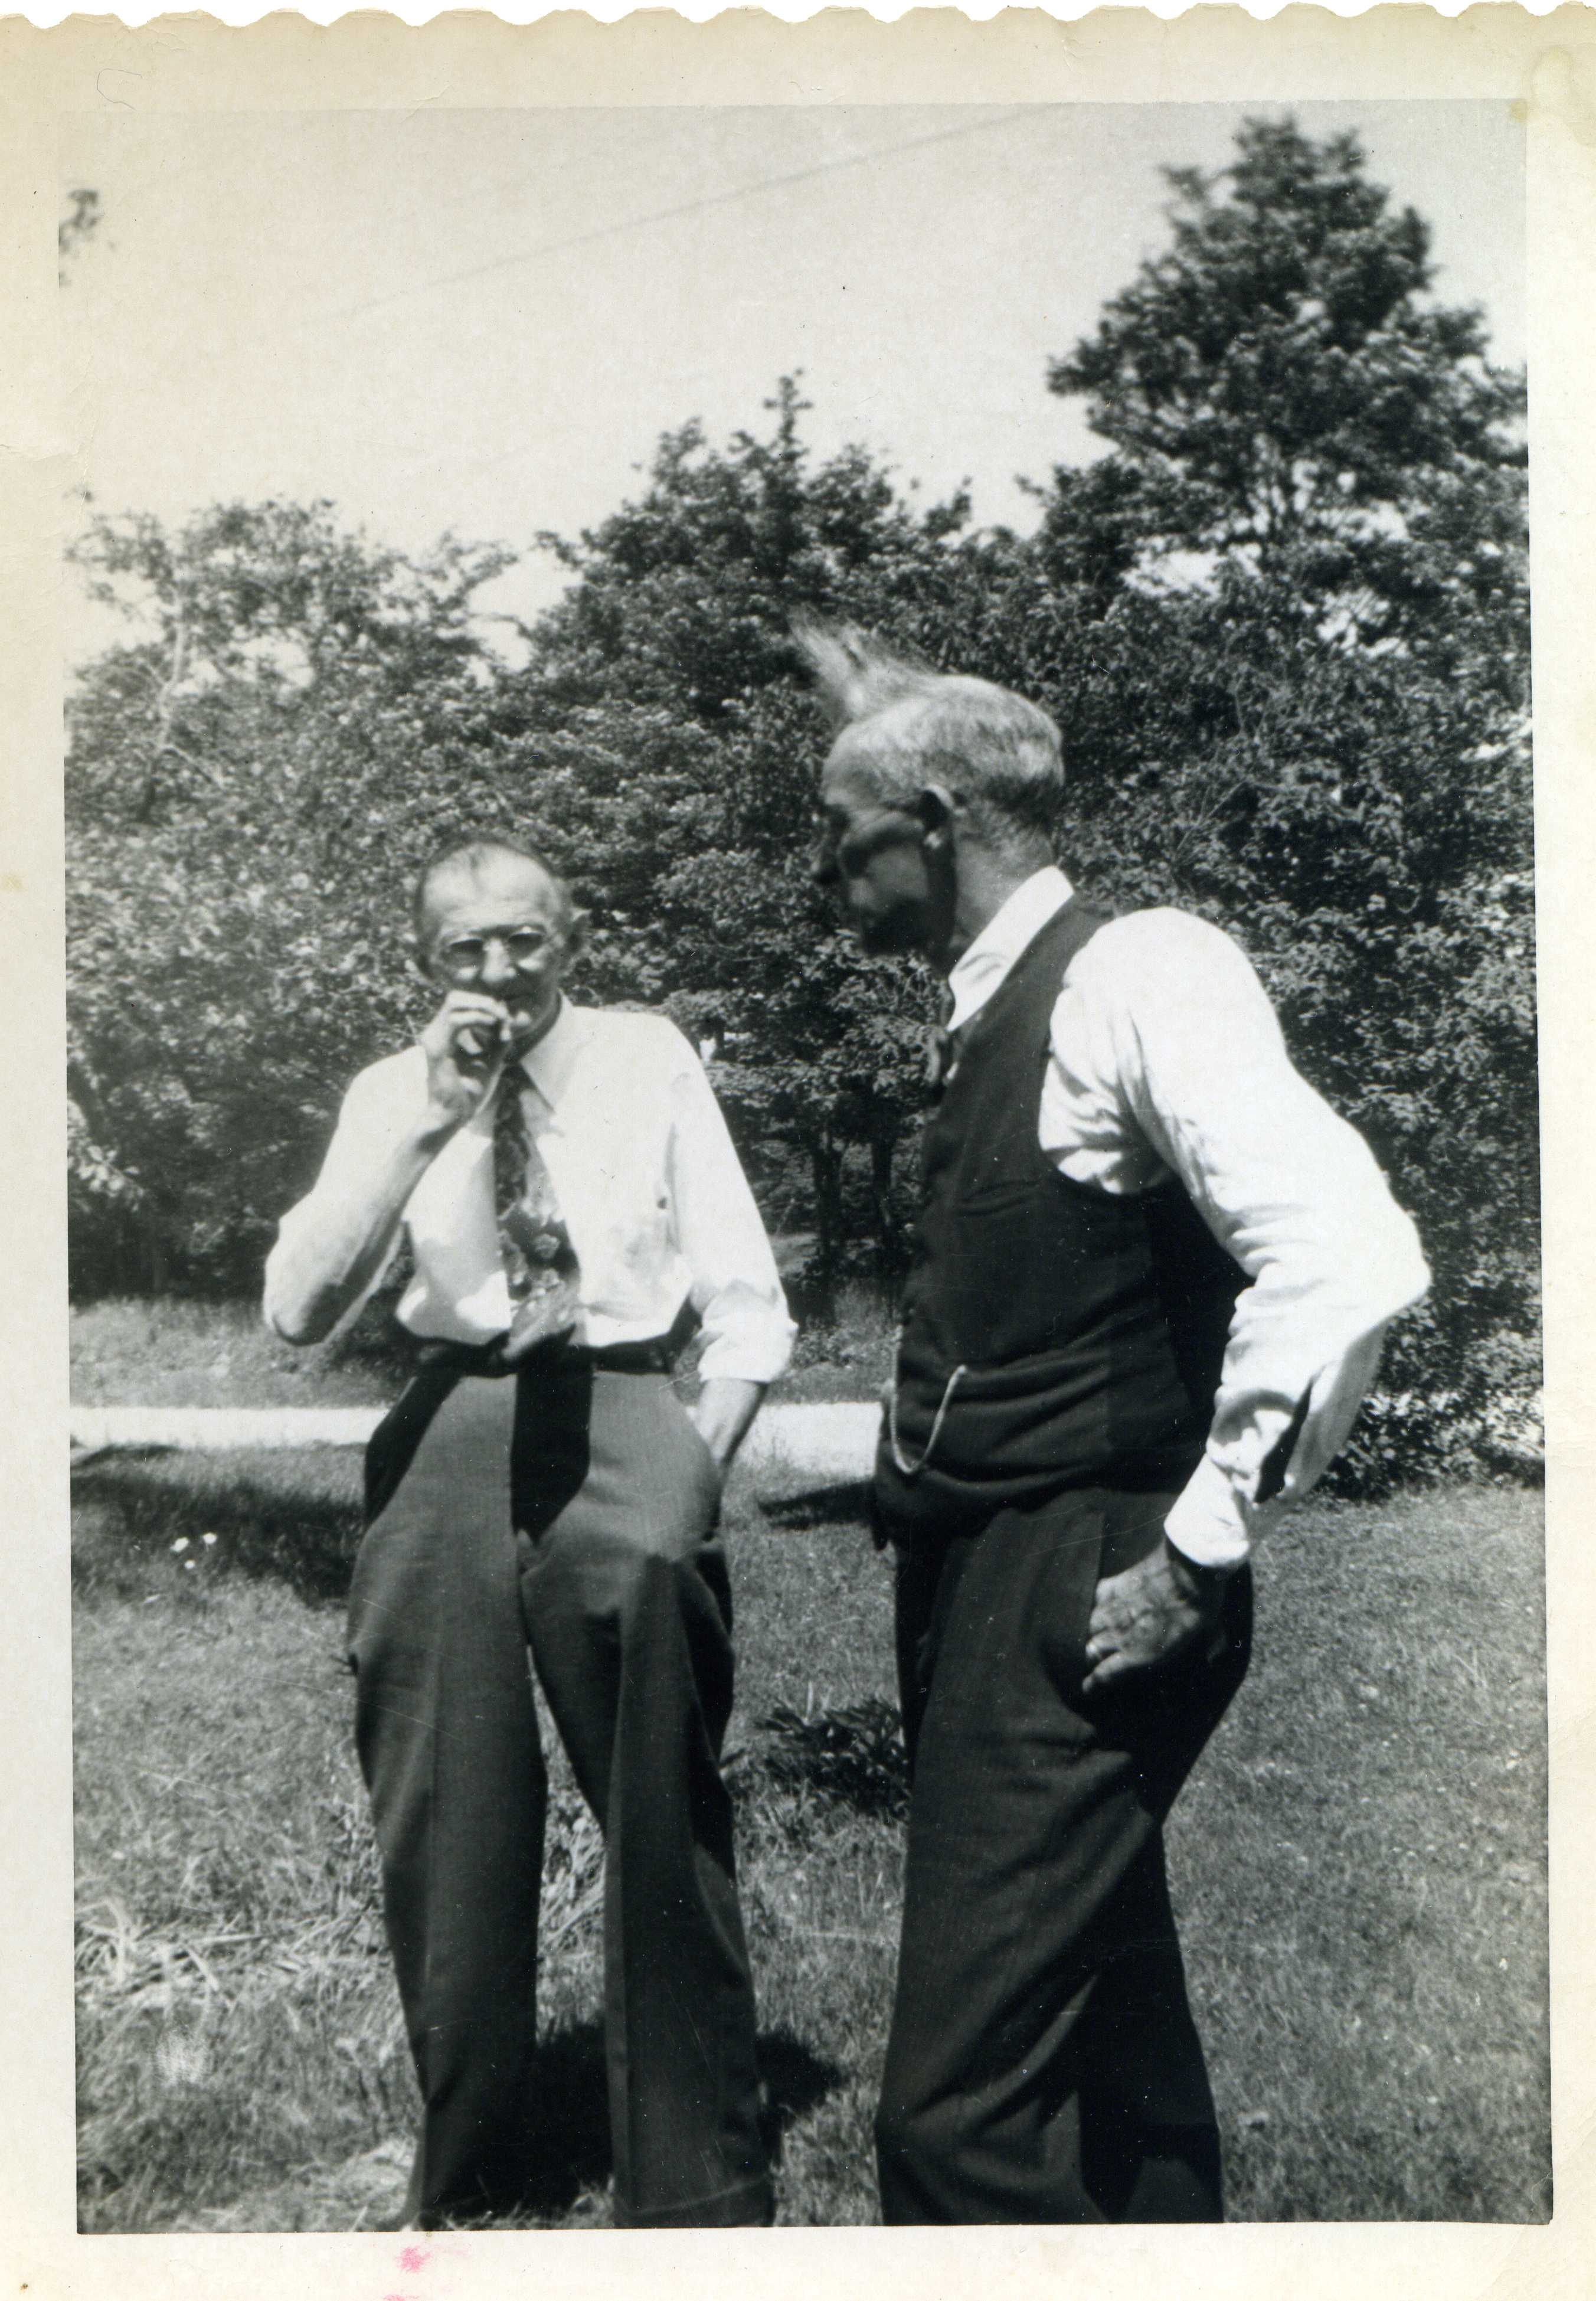 Curtis Marshall and Hubert Shortliffe